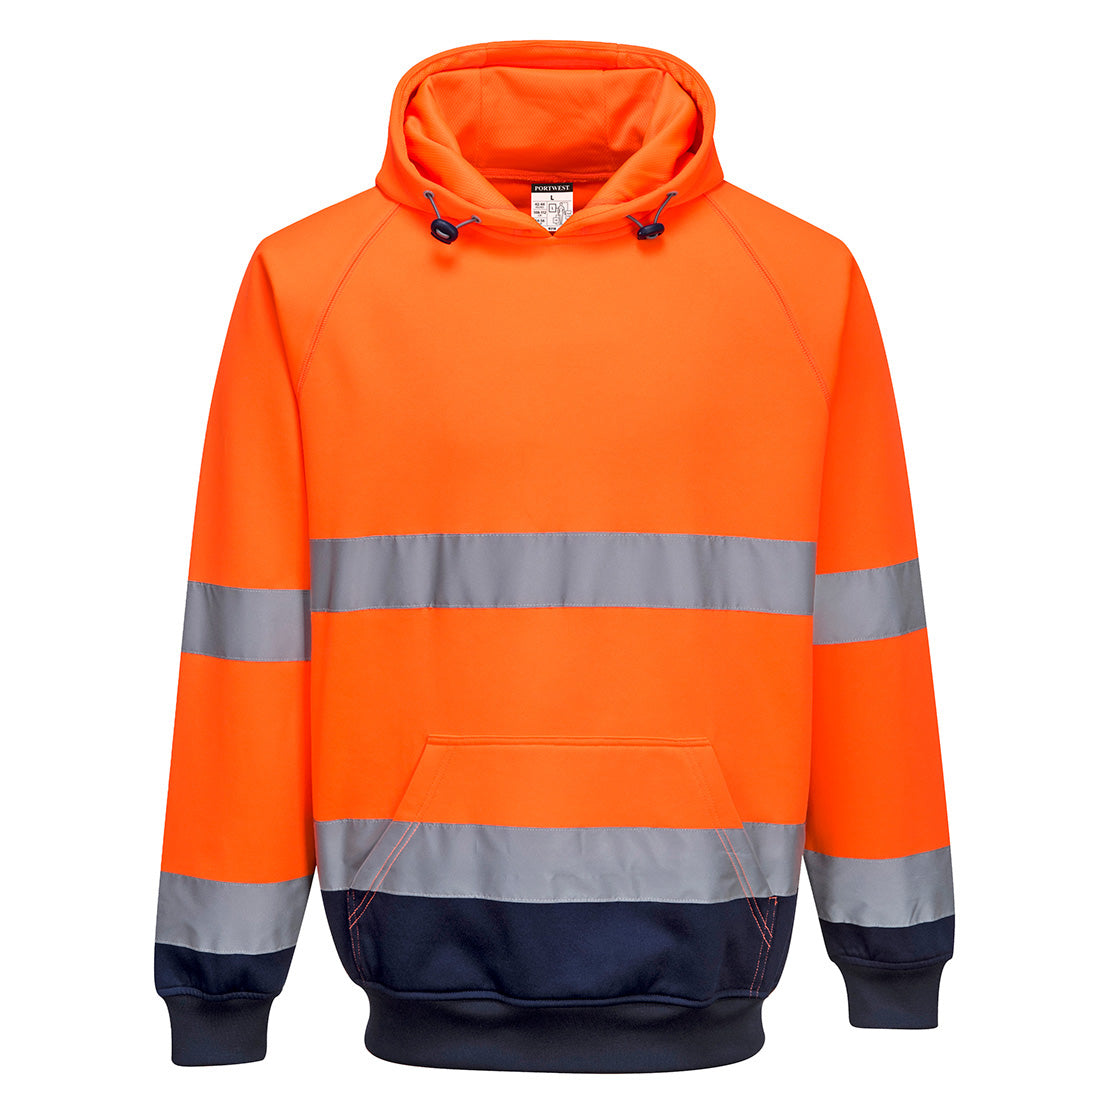 B316 - Two-Tone Hooded Sweatshirt Orange/Navy FRONT